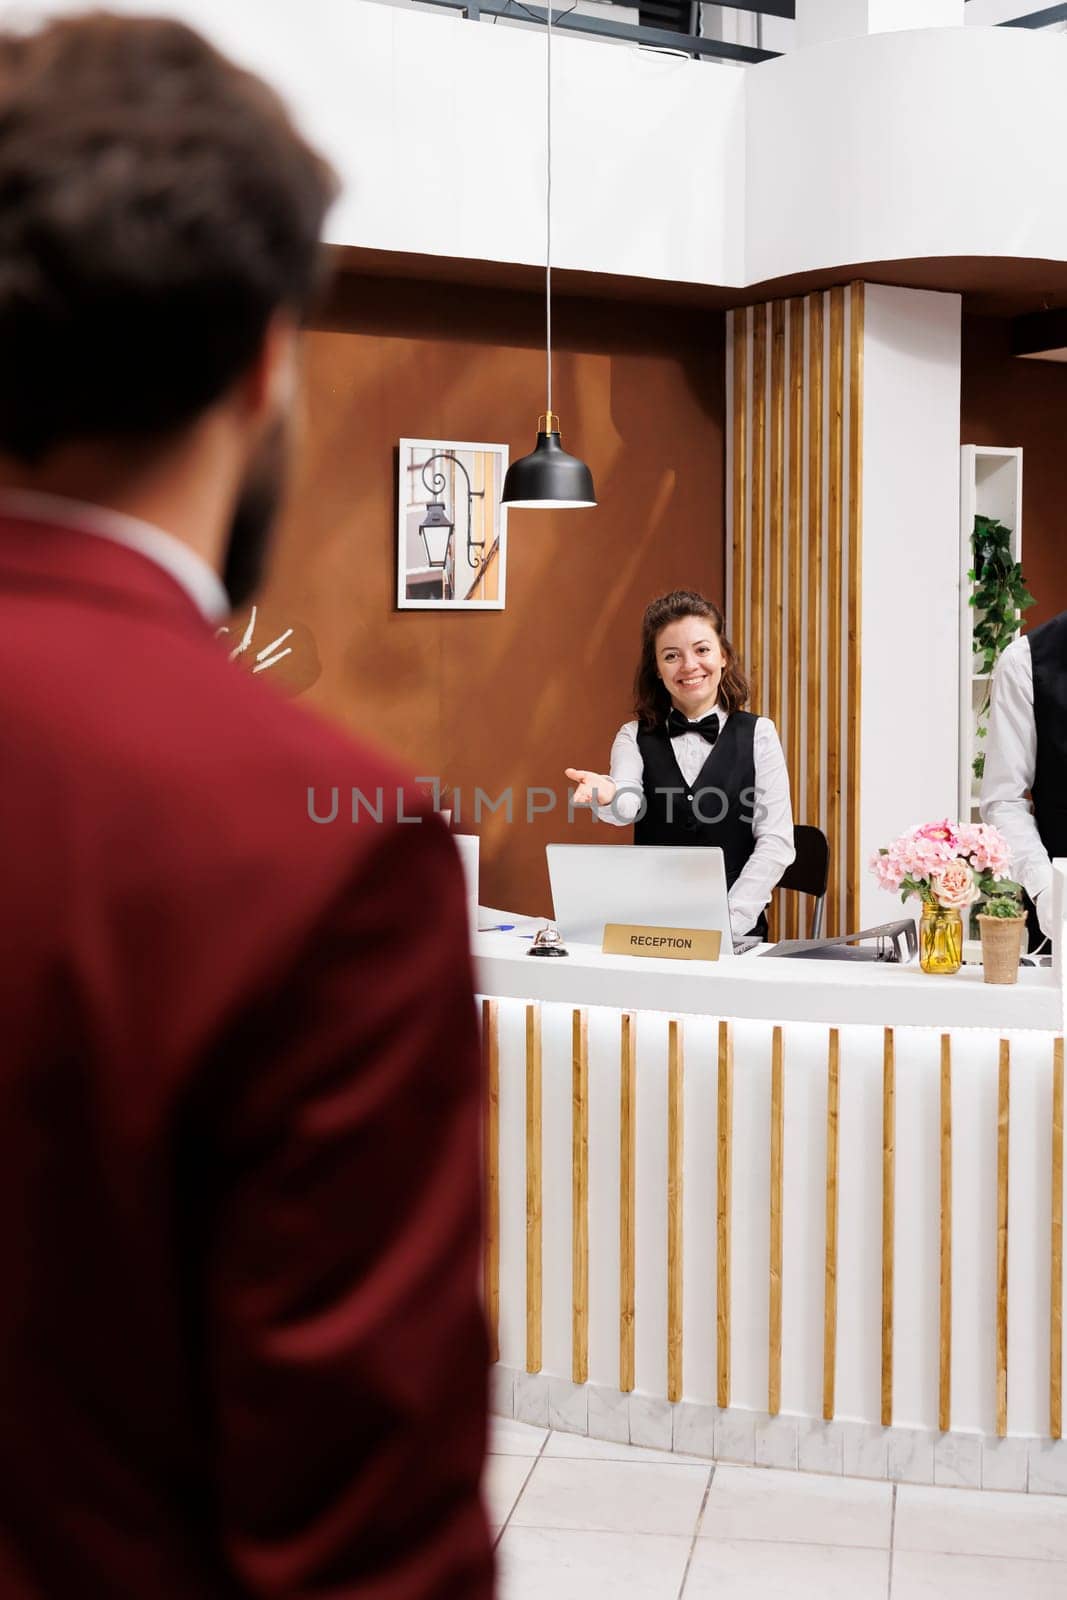 Employee welcoming businessman in lobby by DCStudio